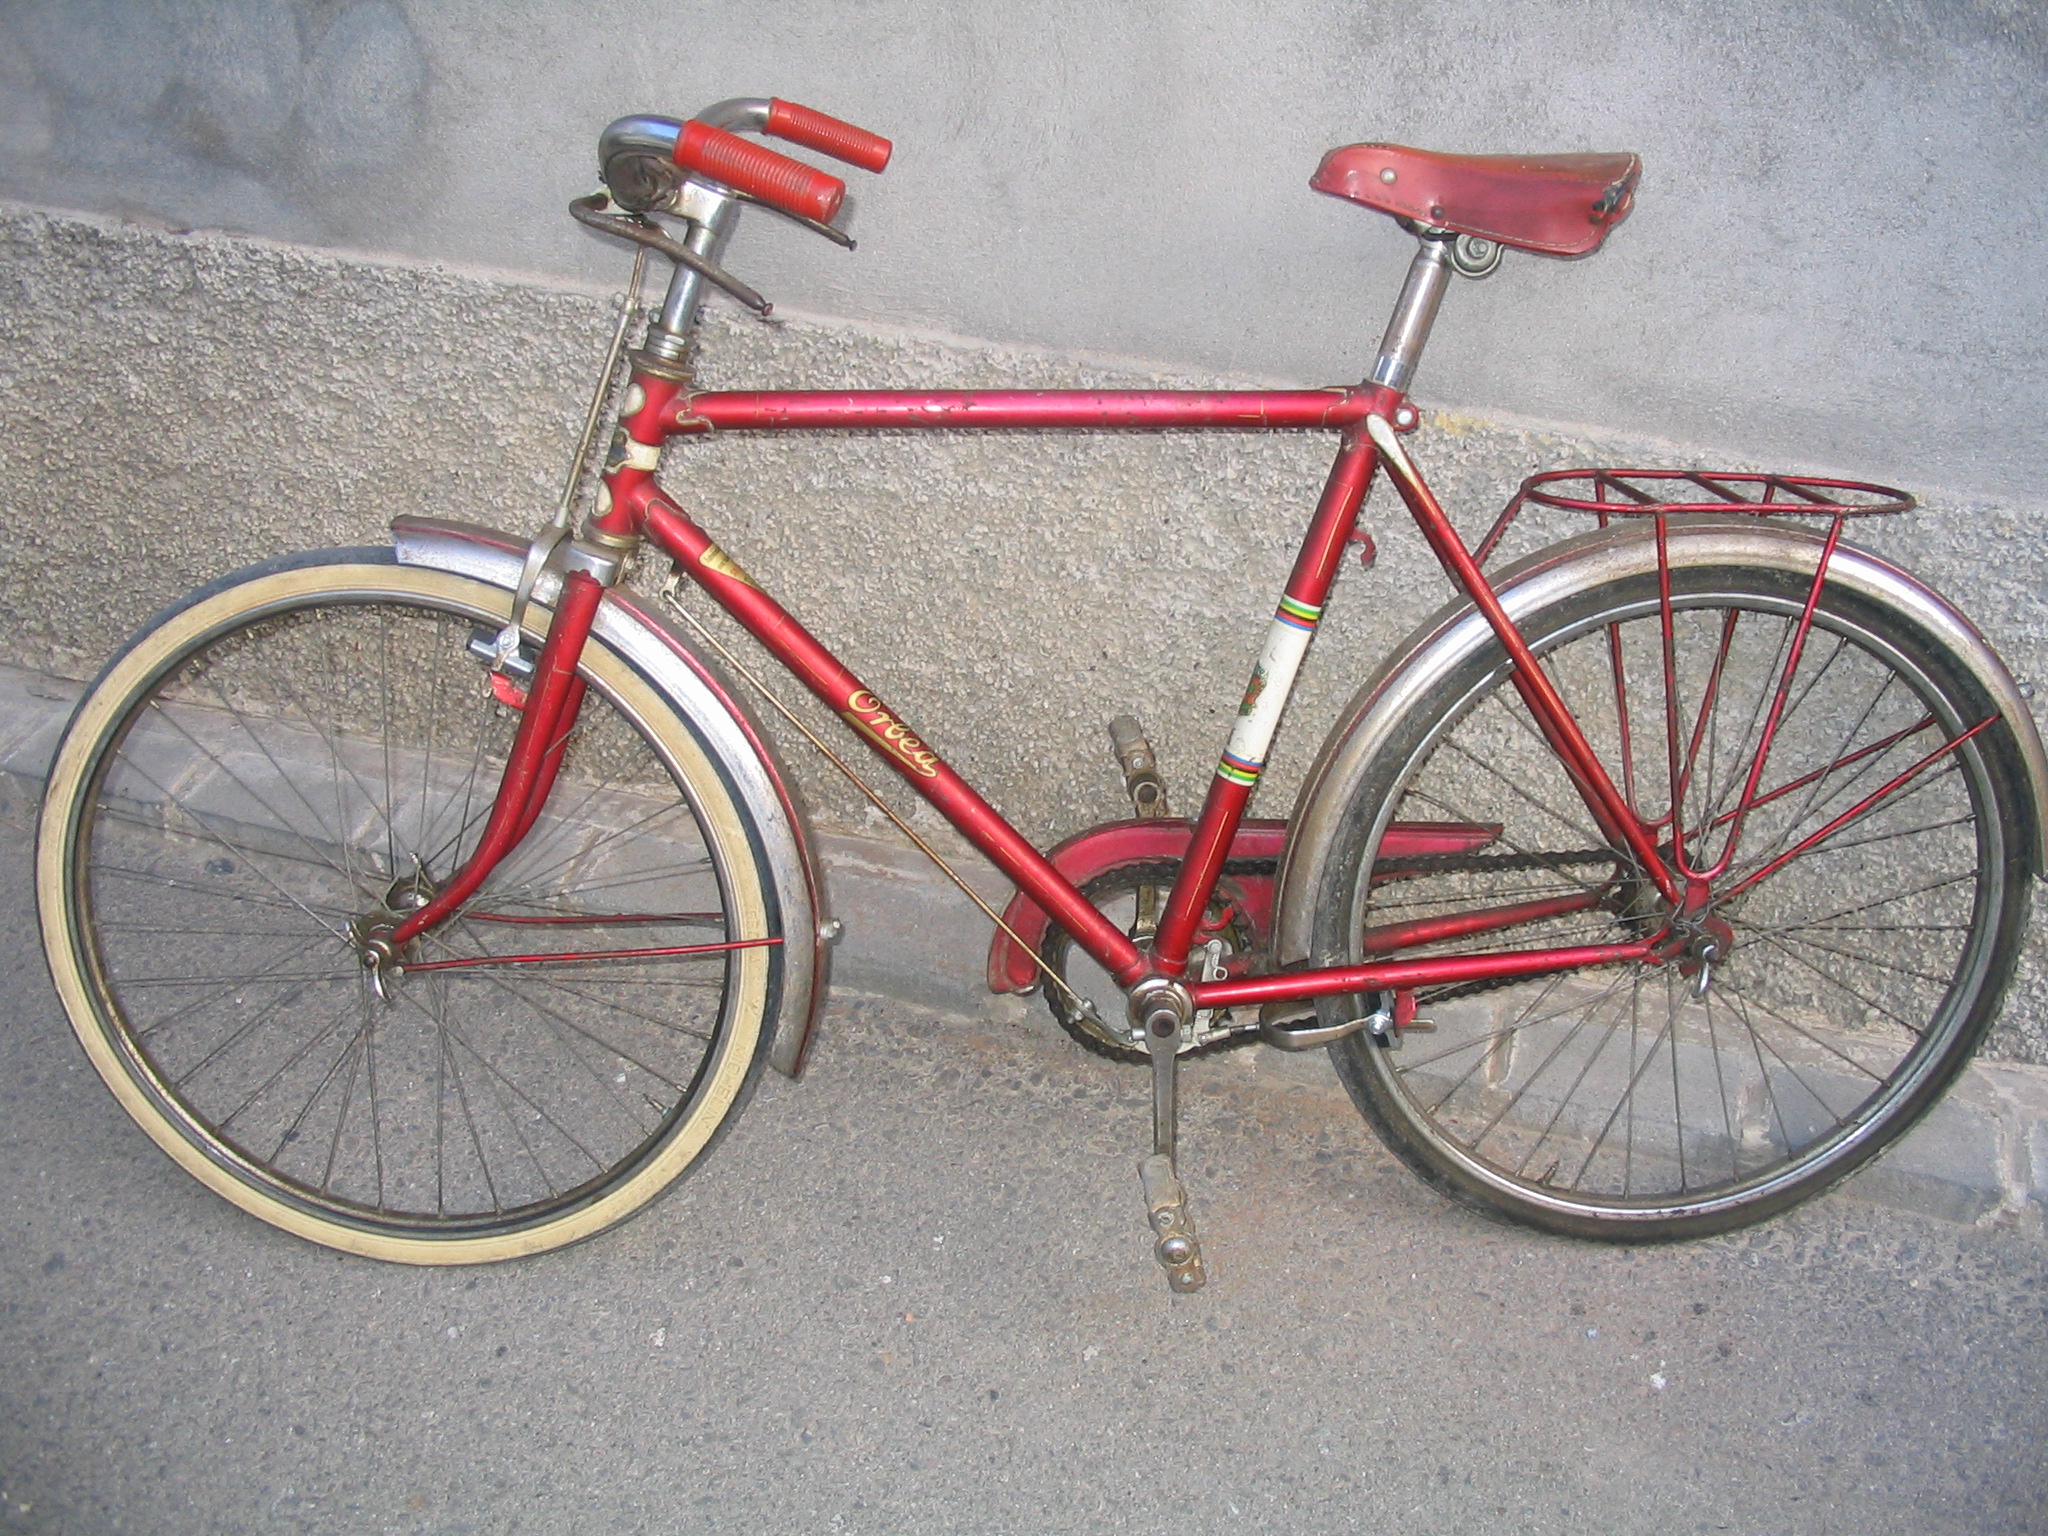 hilo sobrina Decir File:Bicicleta Orbea (de la decada de 1970) 01.JPG - Wikimedia Commons